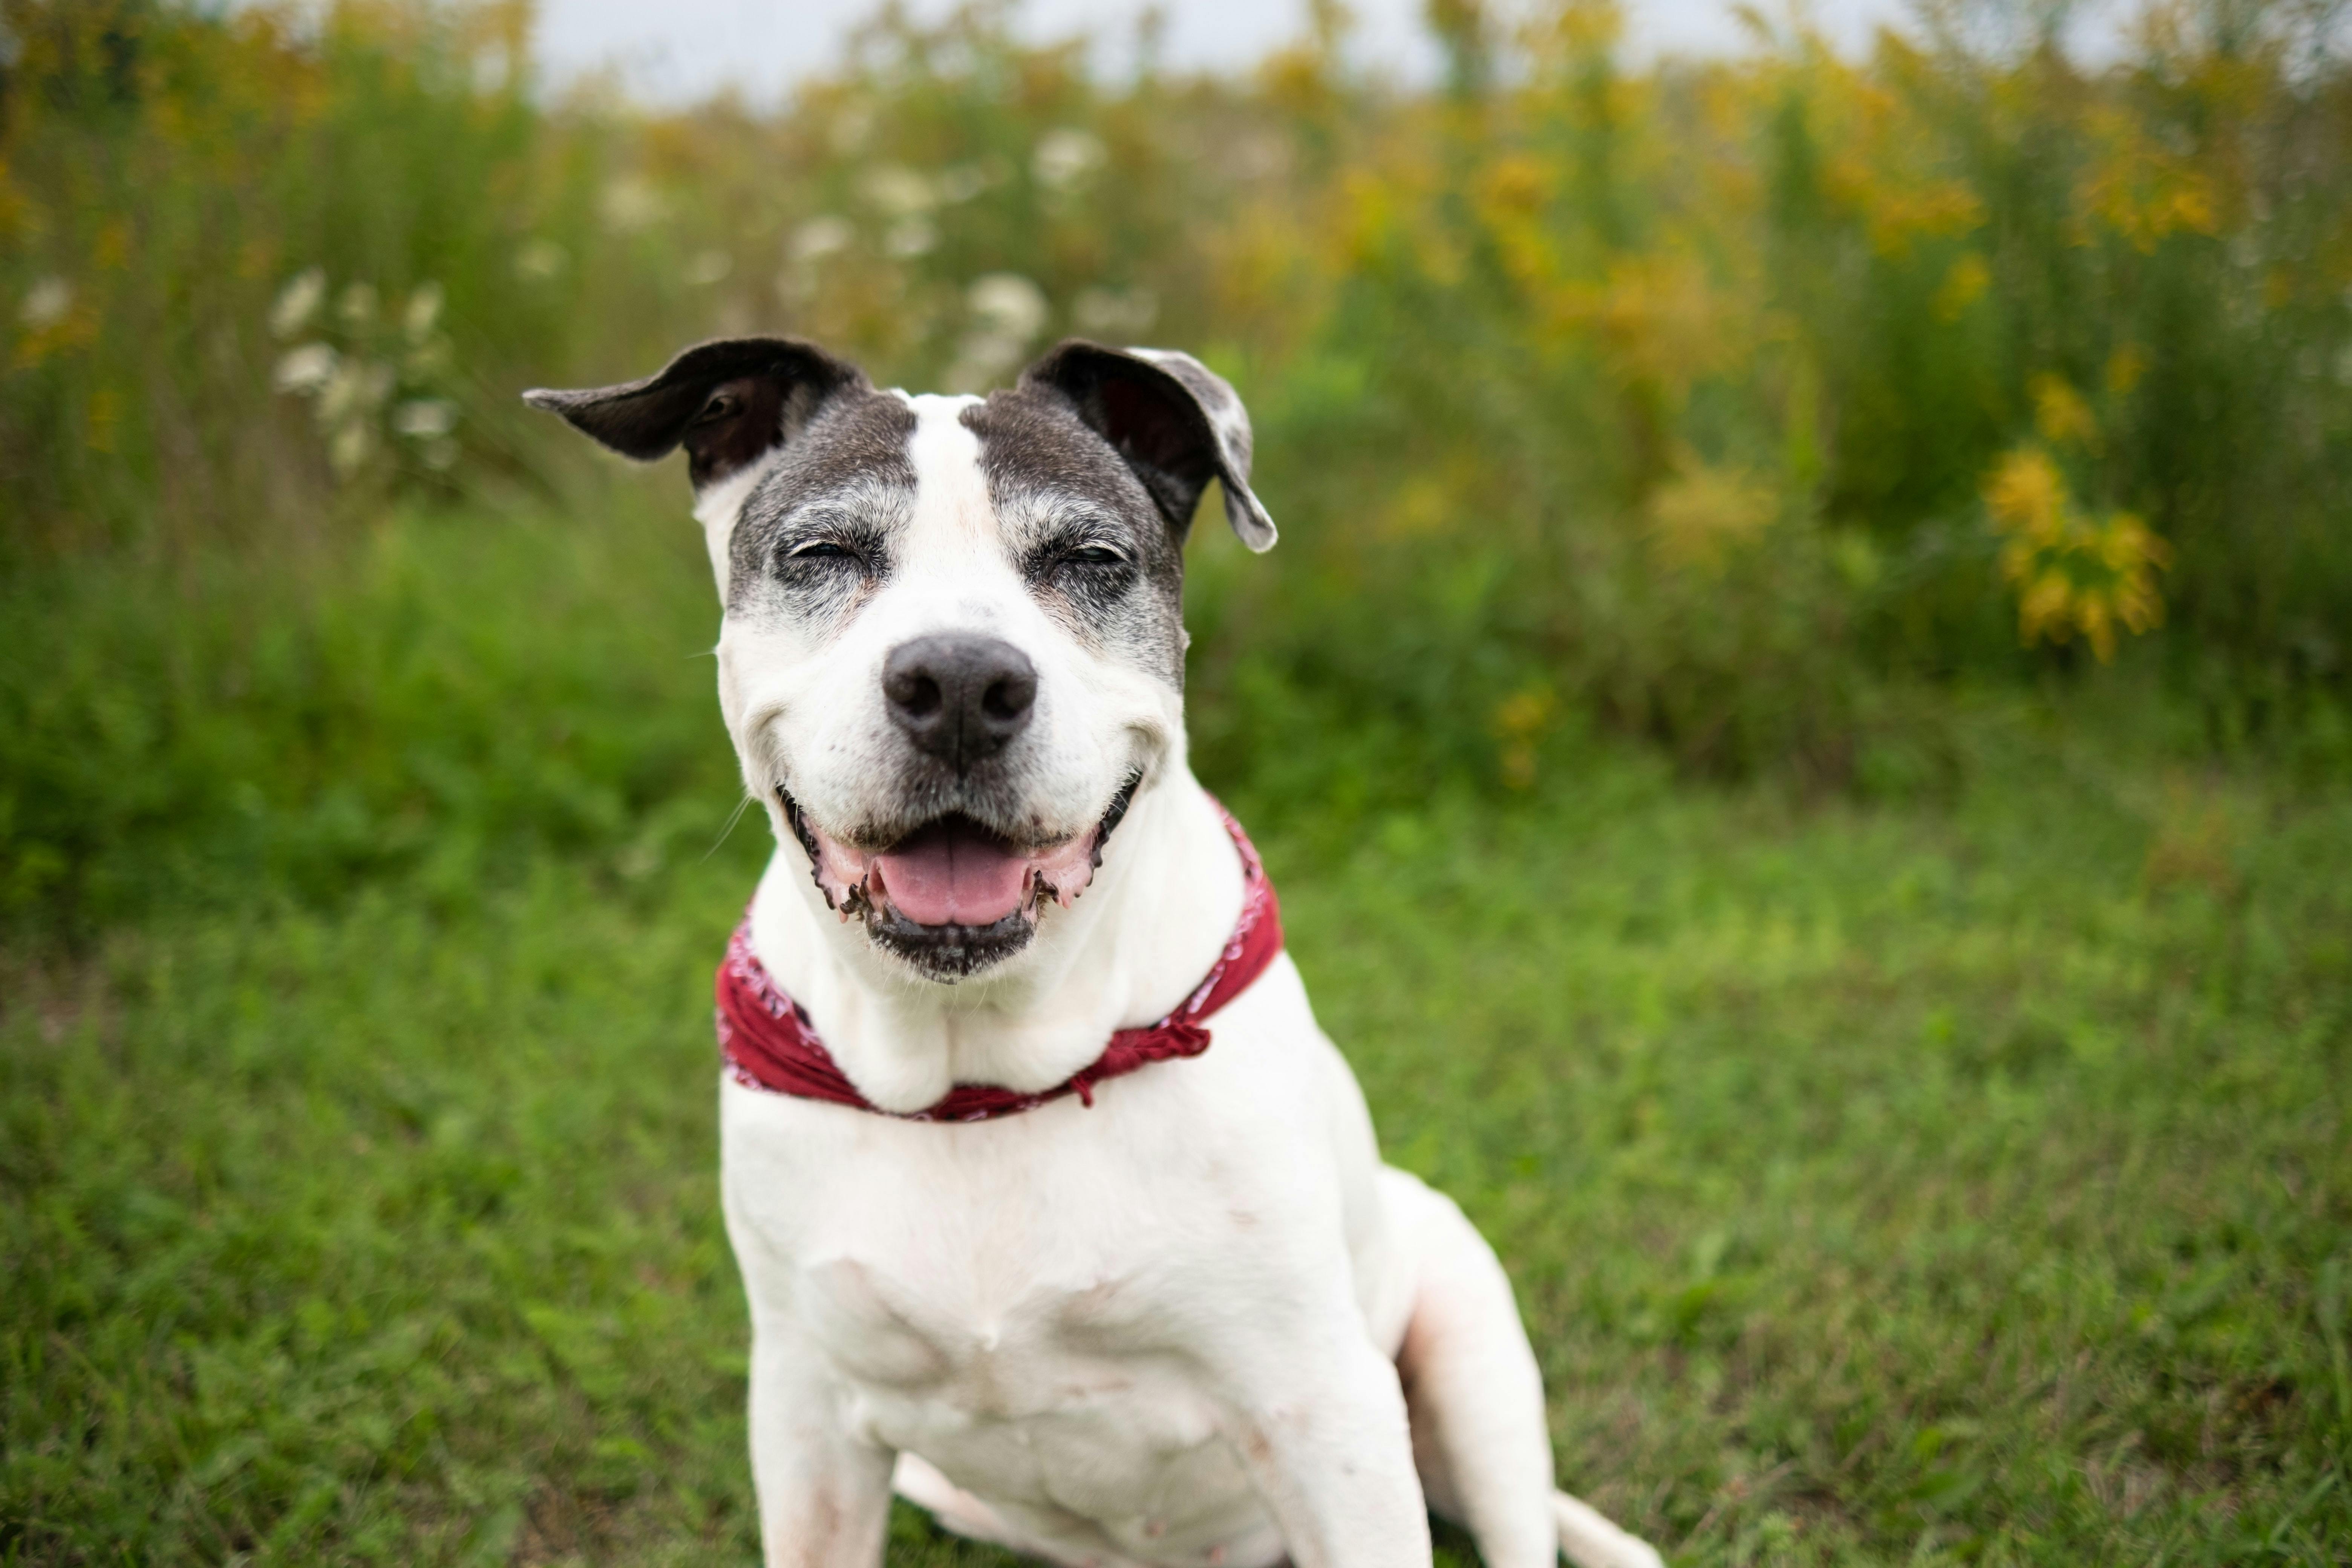 Senior dog smiling in the grass.